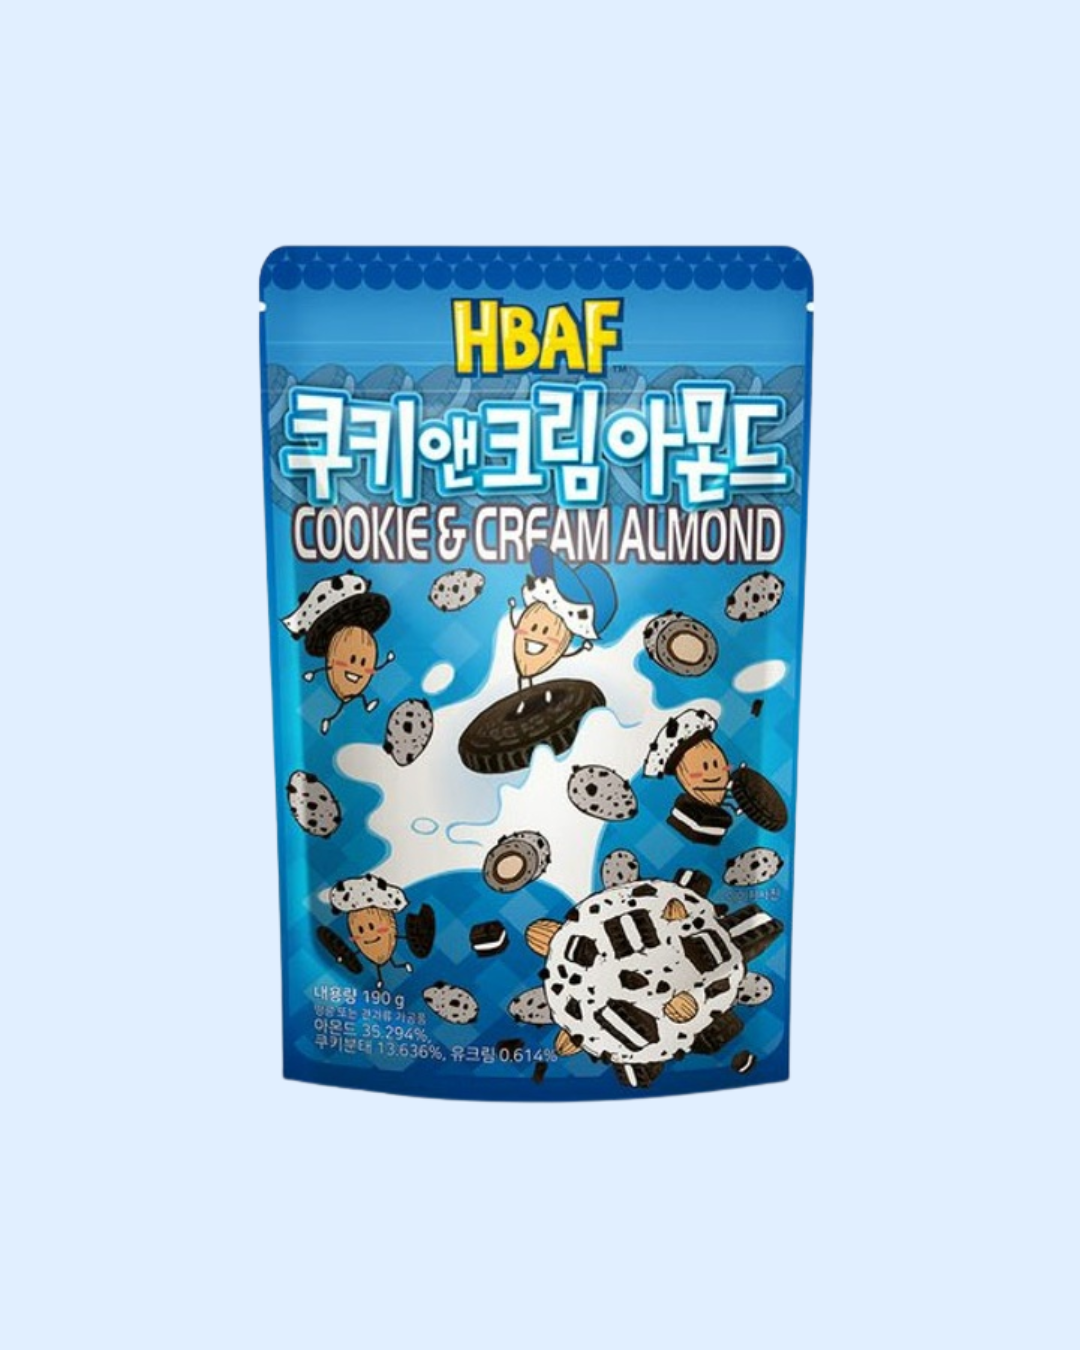 HBAF Cookies & Cream Almond